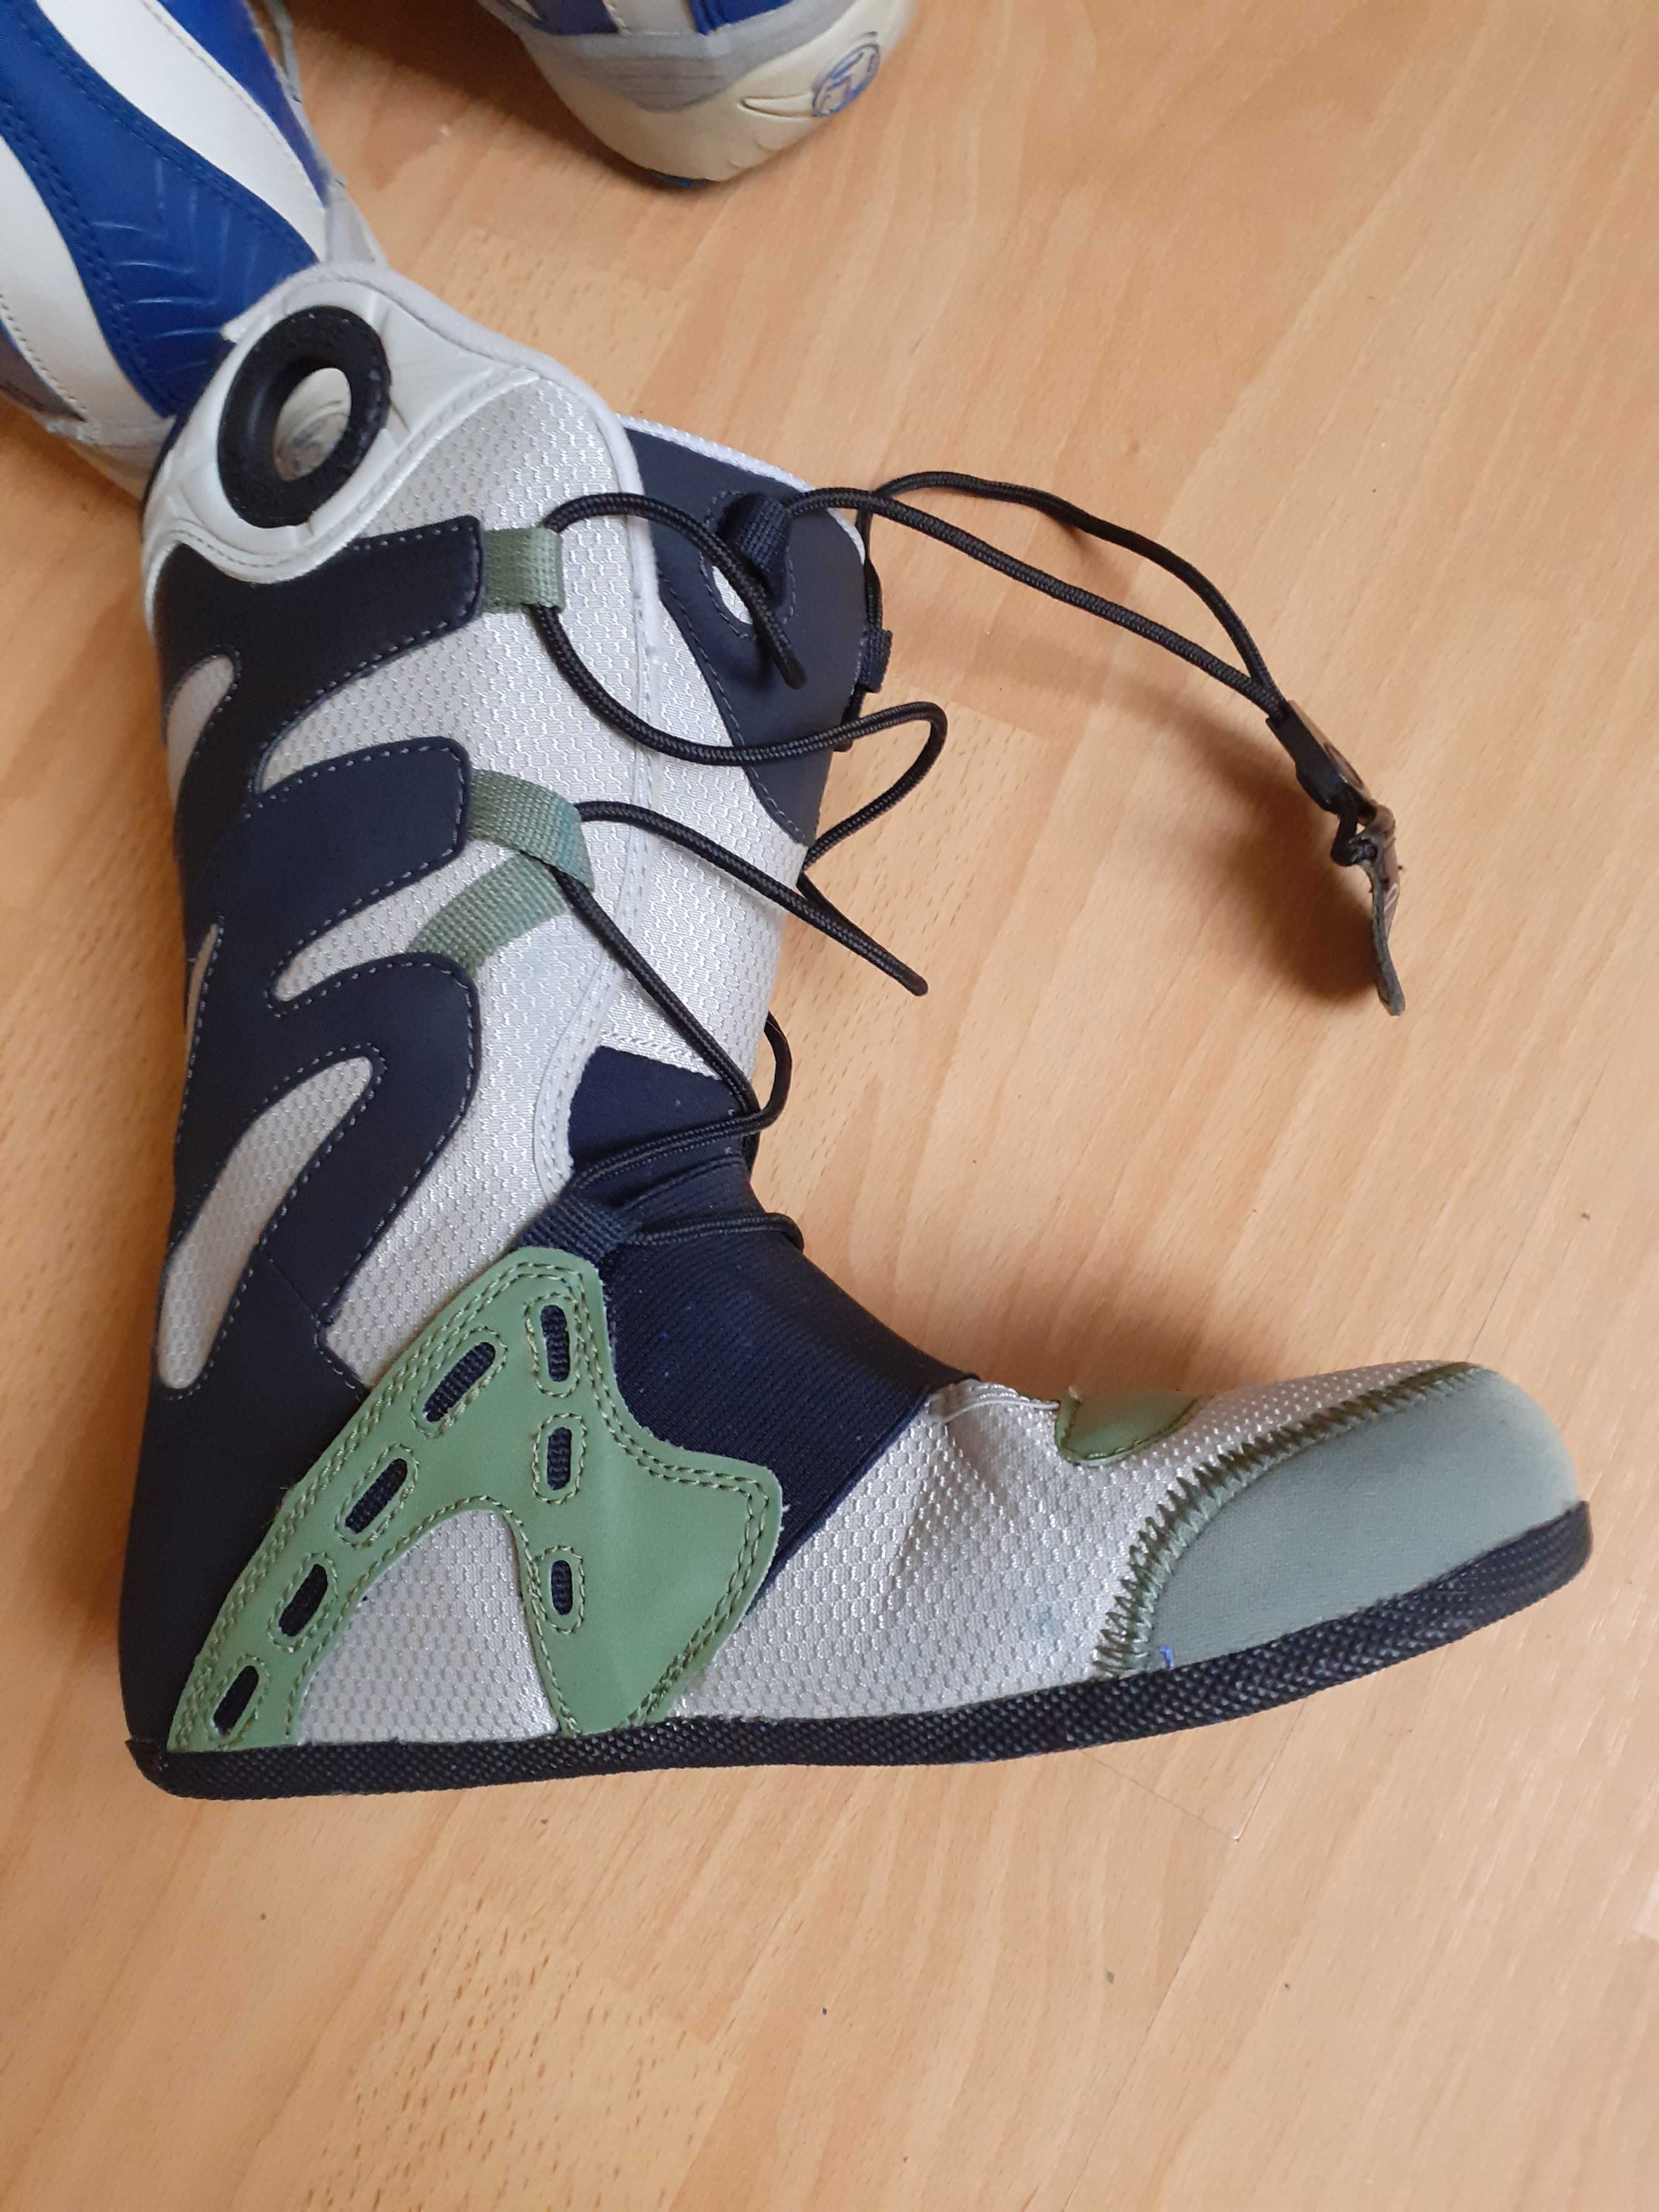 Damskie buty snowboardowe Deeluxe r. 37 / 24 cm.